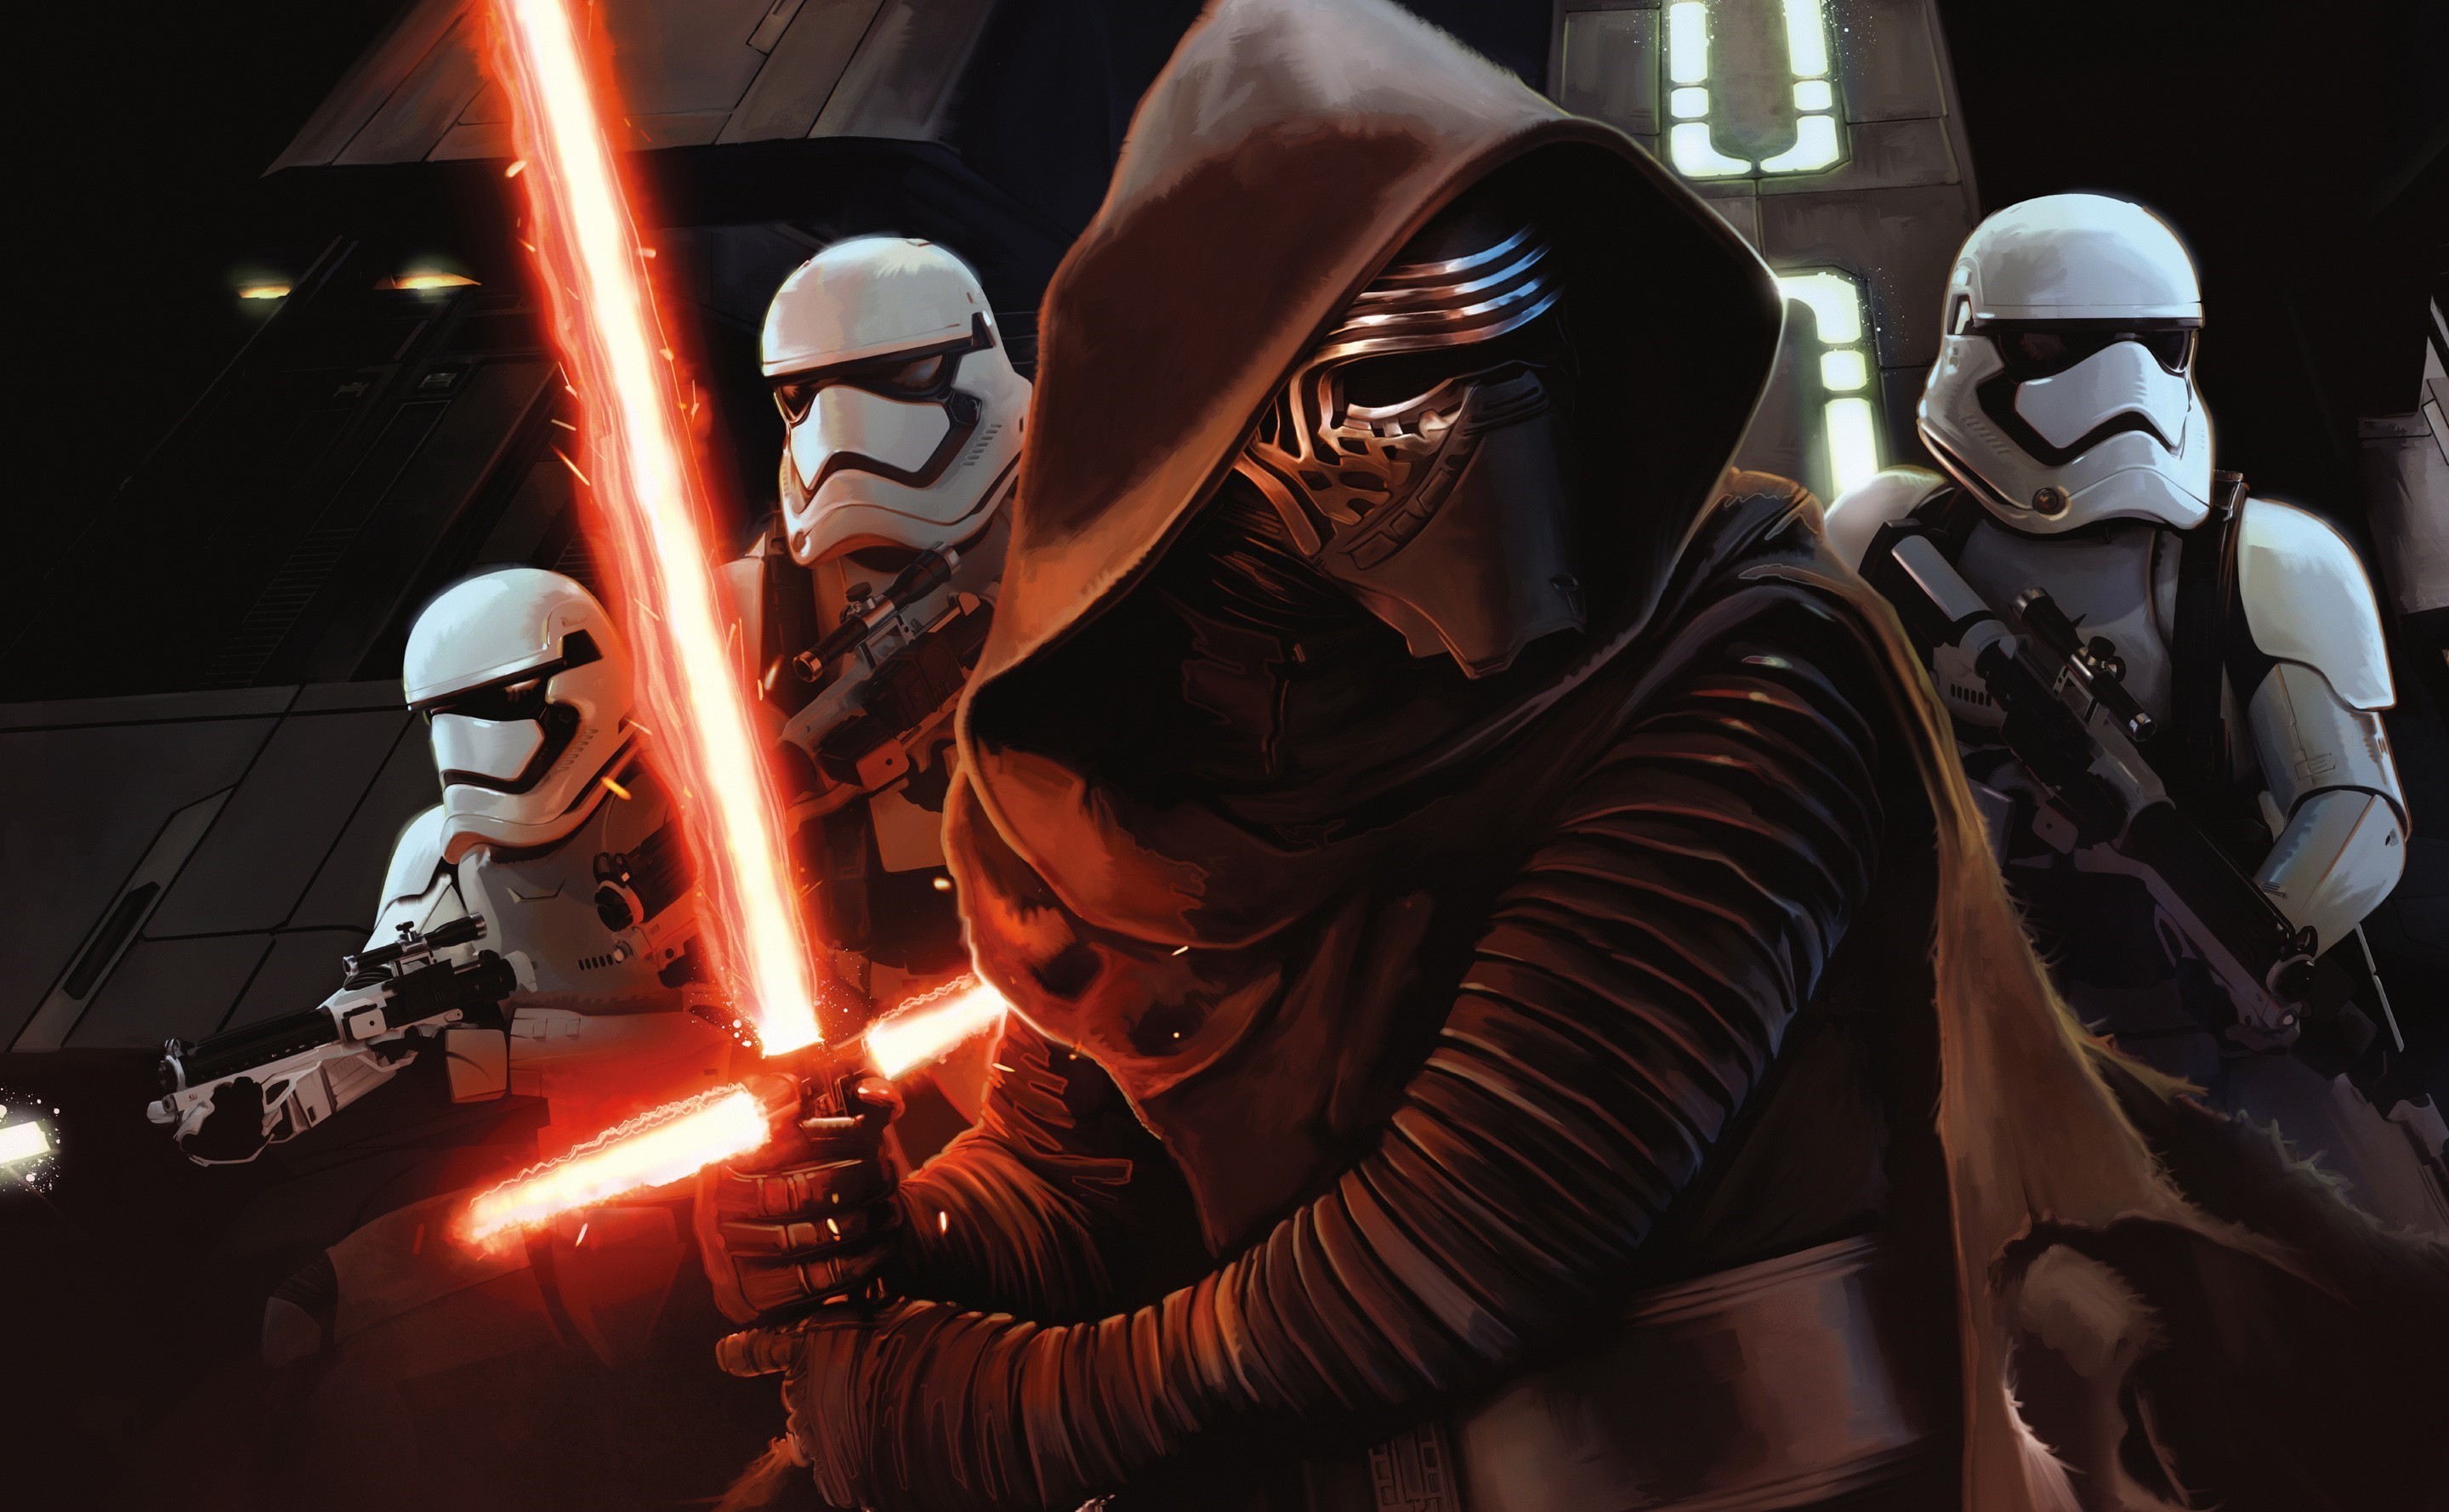 Star Wars: Episode VII The Force Awakens, Artwork, Kylo Ren, Stormtrooper